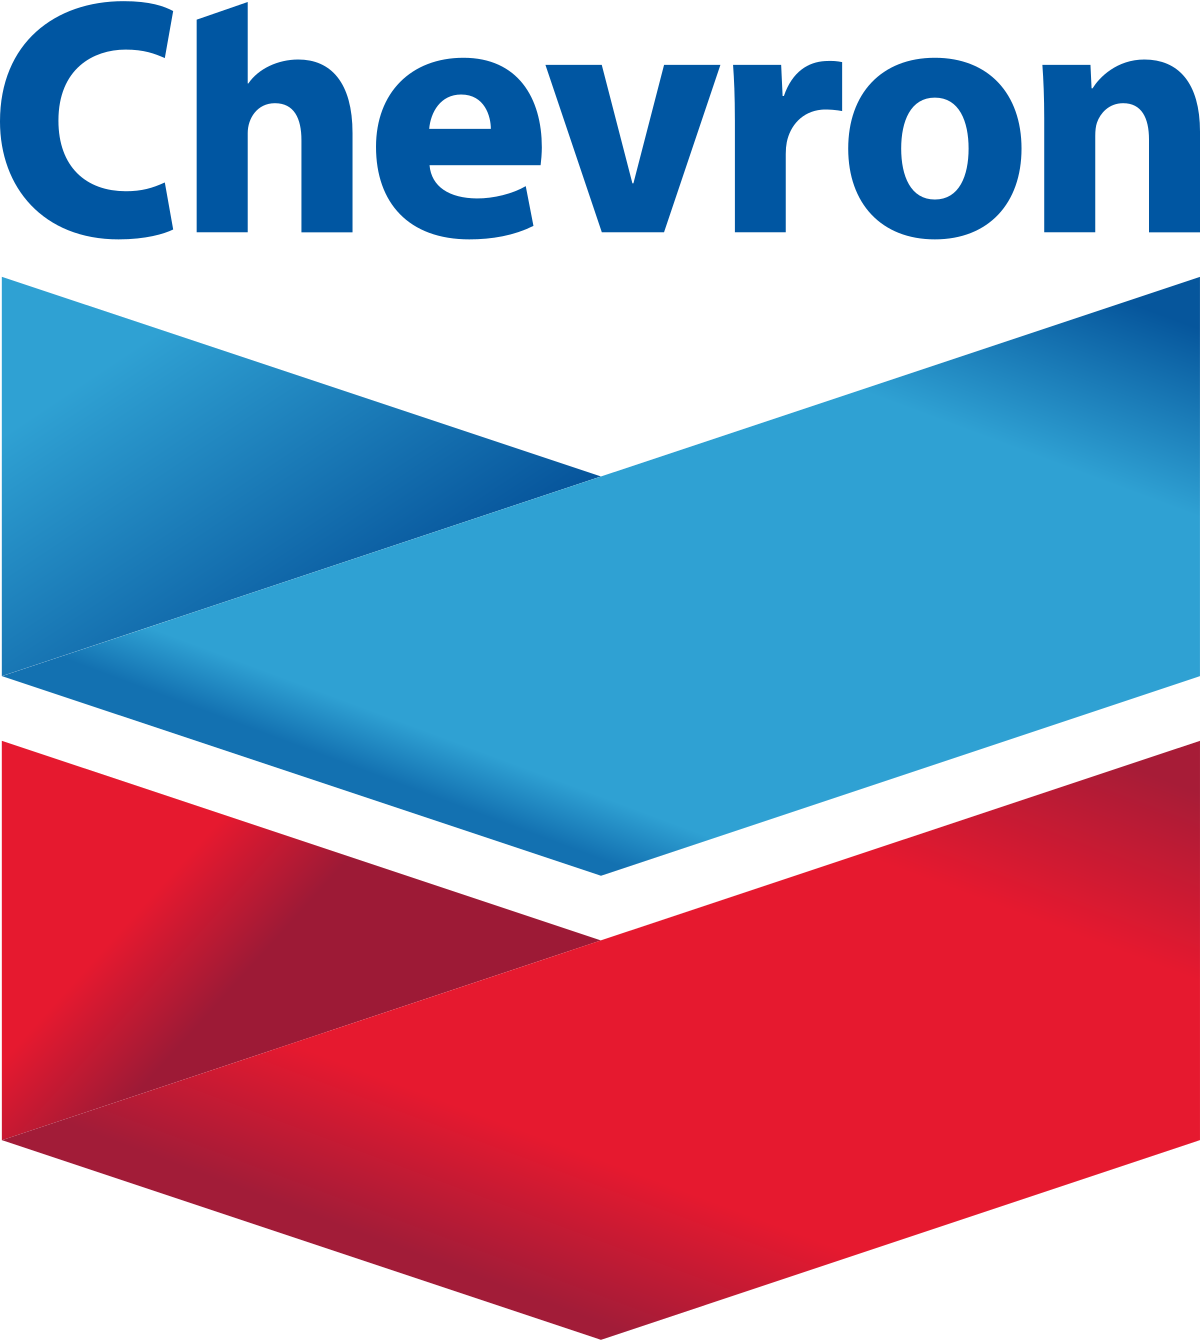 Chevron readies new oil drilling push in Venezuela to boost output